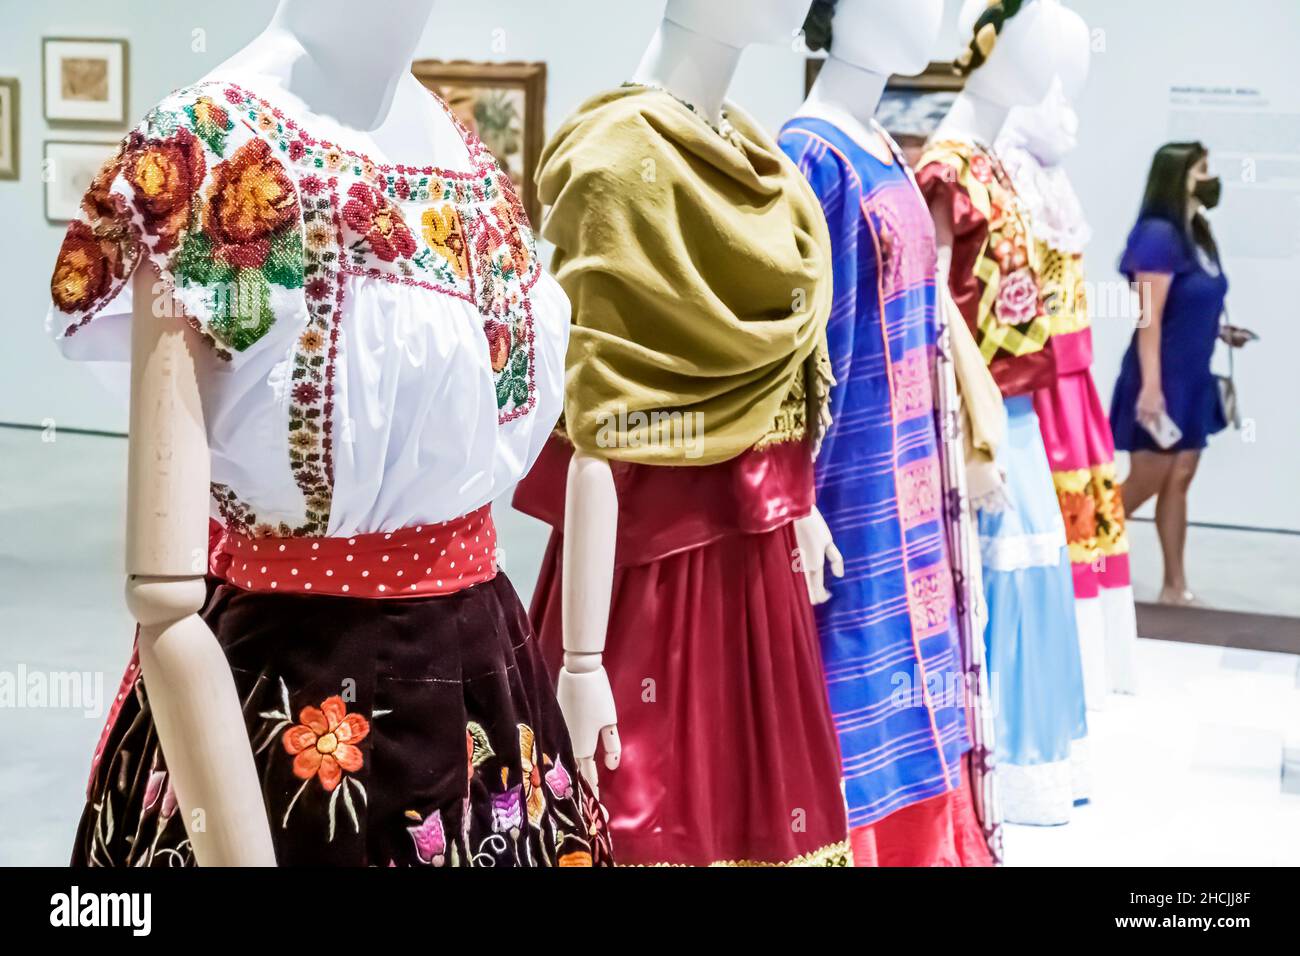 Frida kahlo exhibition clothing dress dresses hi-res stock photography and  images - Alamy